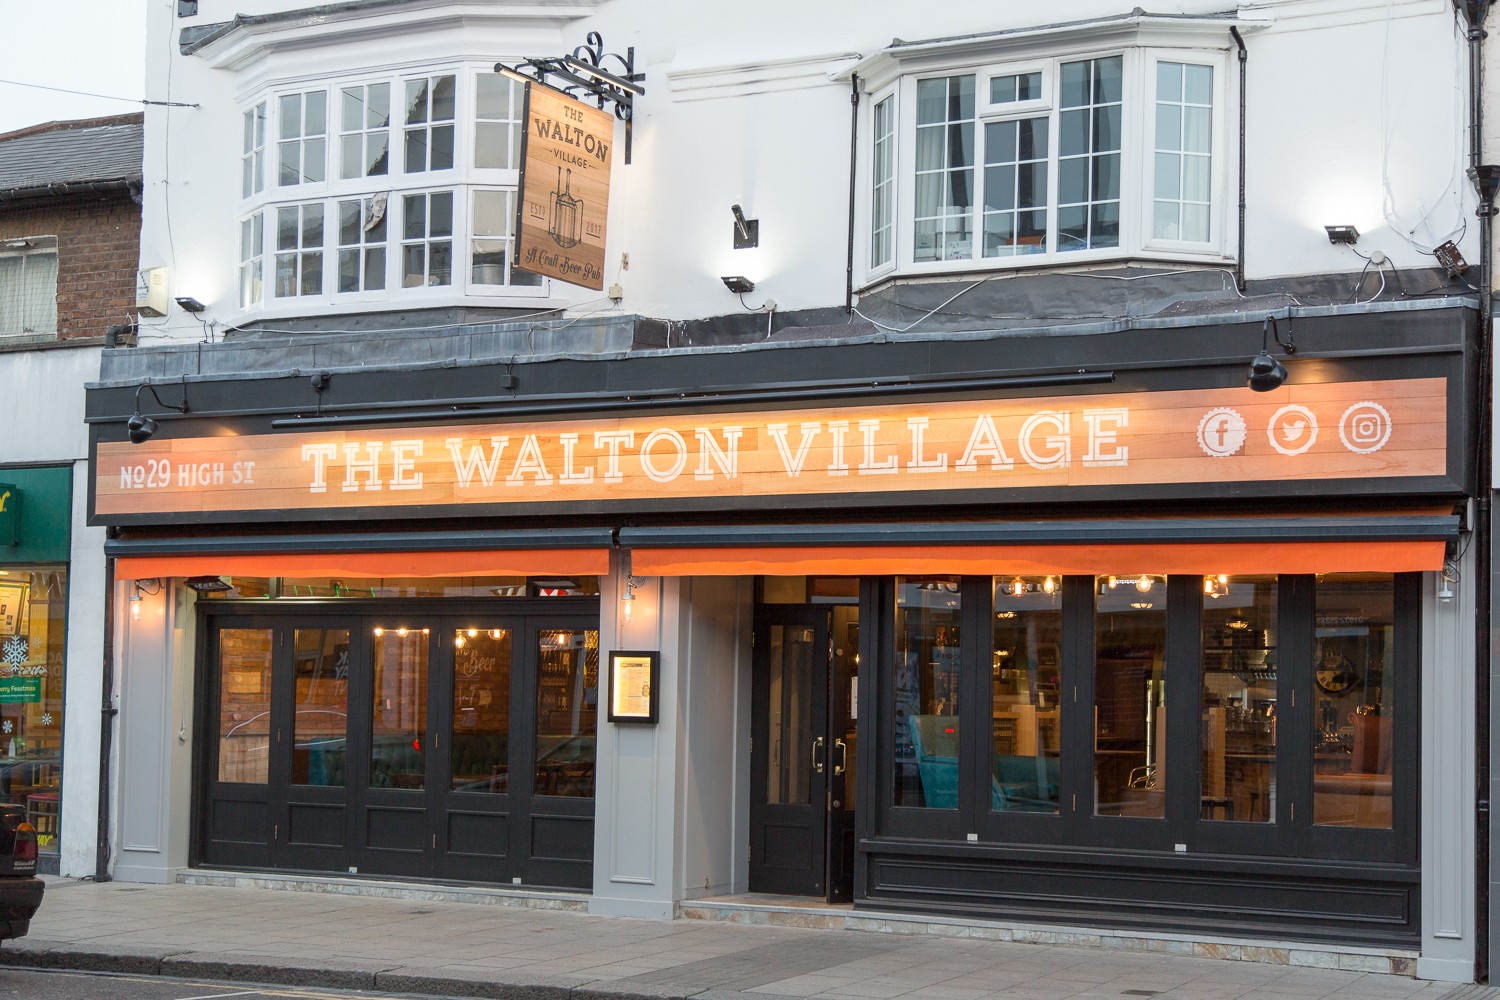 The Walton Village